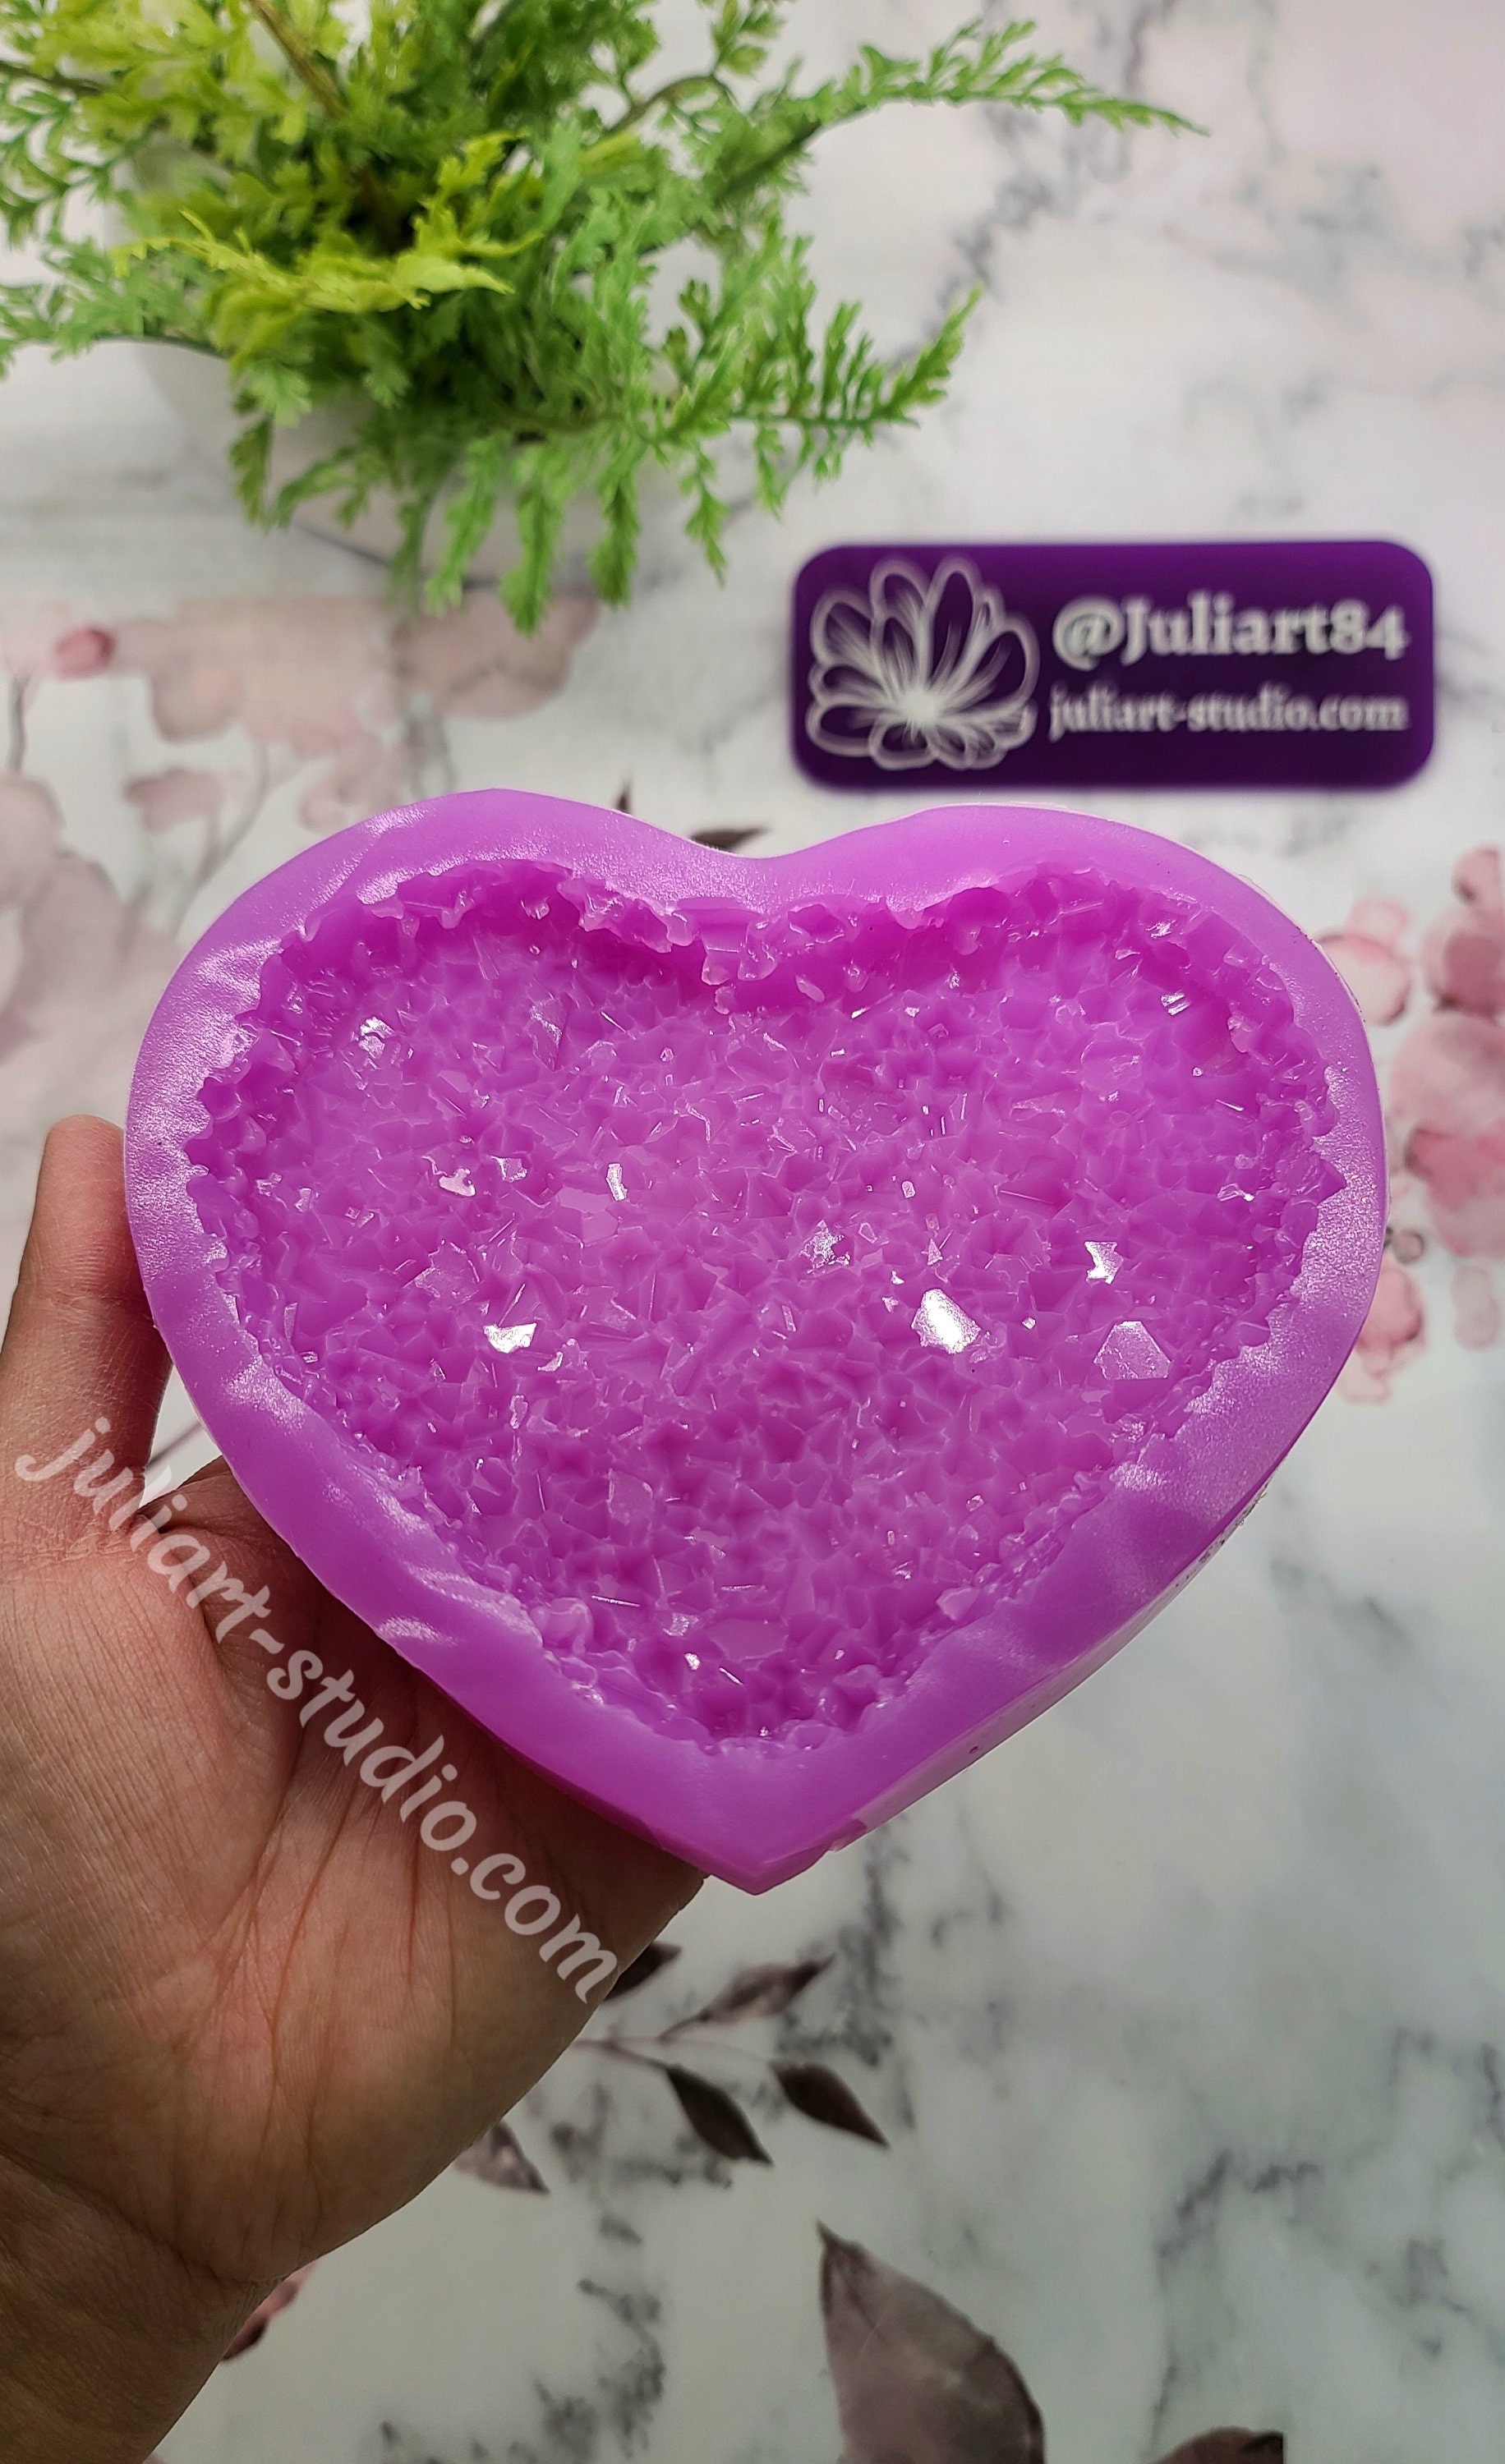 Dockapa Heart Shaped Silicone Baking Mat - Gummies Molds Silicone Mat Mini Hearts Cute Silicone Molds for Candy Baking Mold - 15.5 inch x 11 inch Heart Shaped